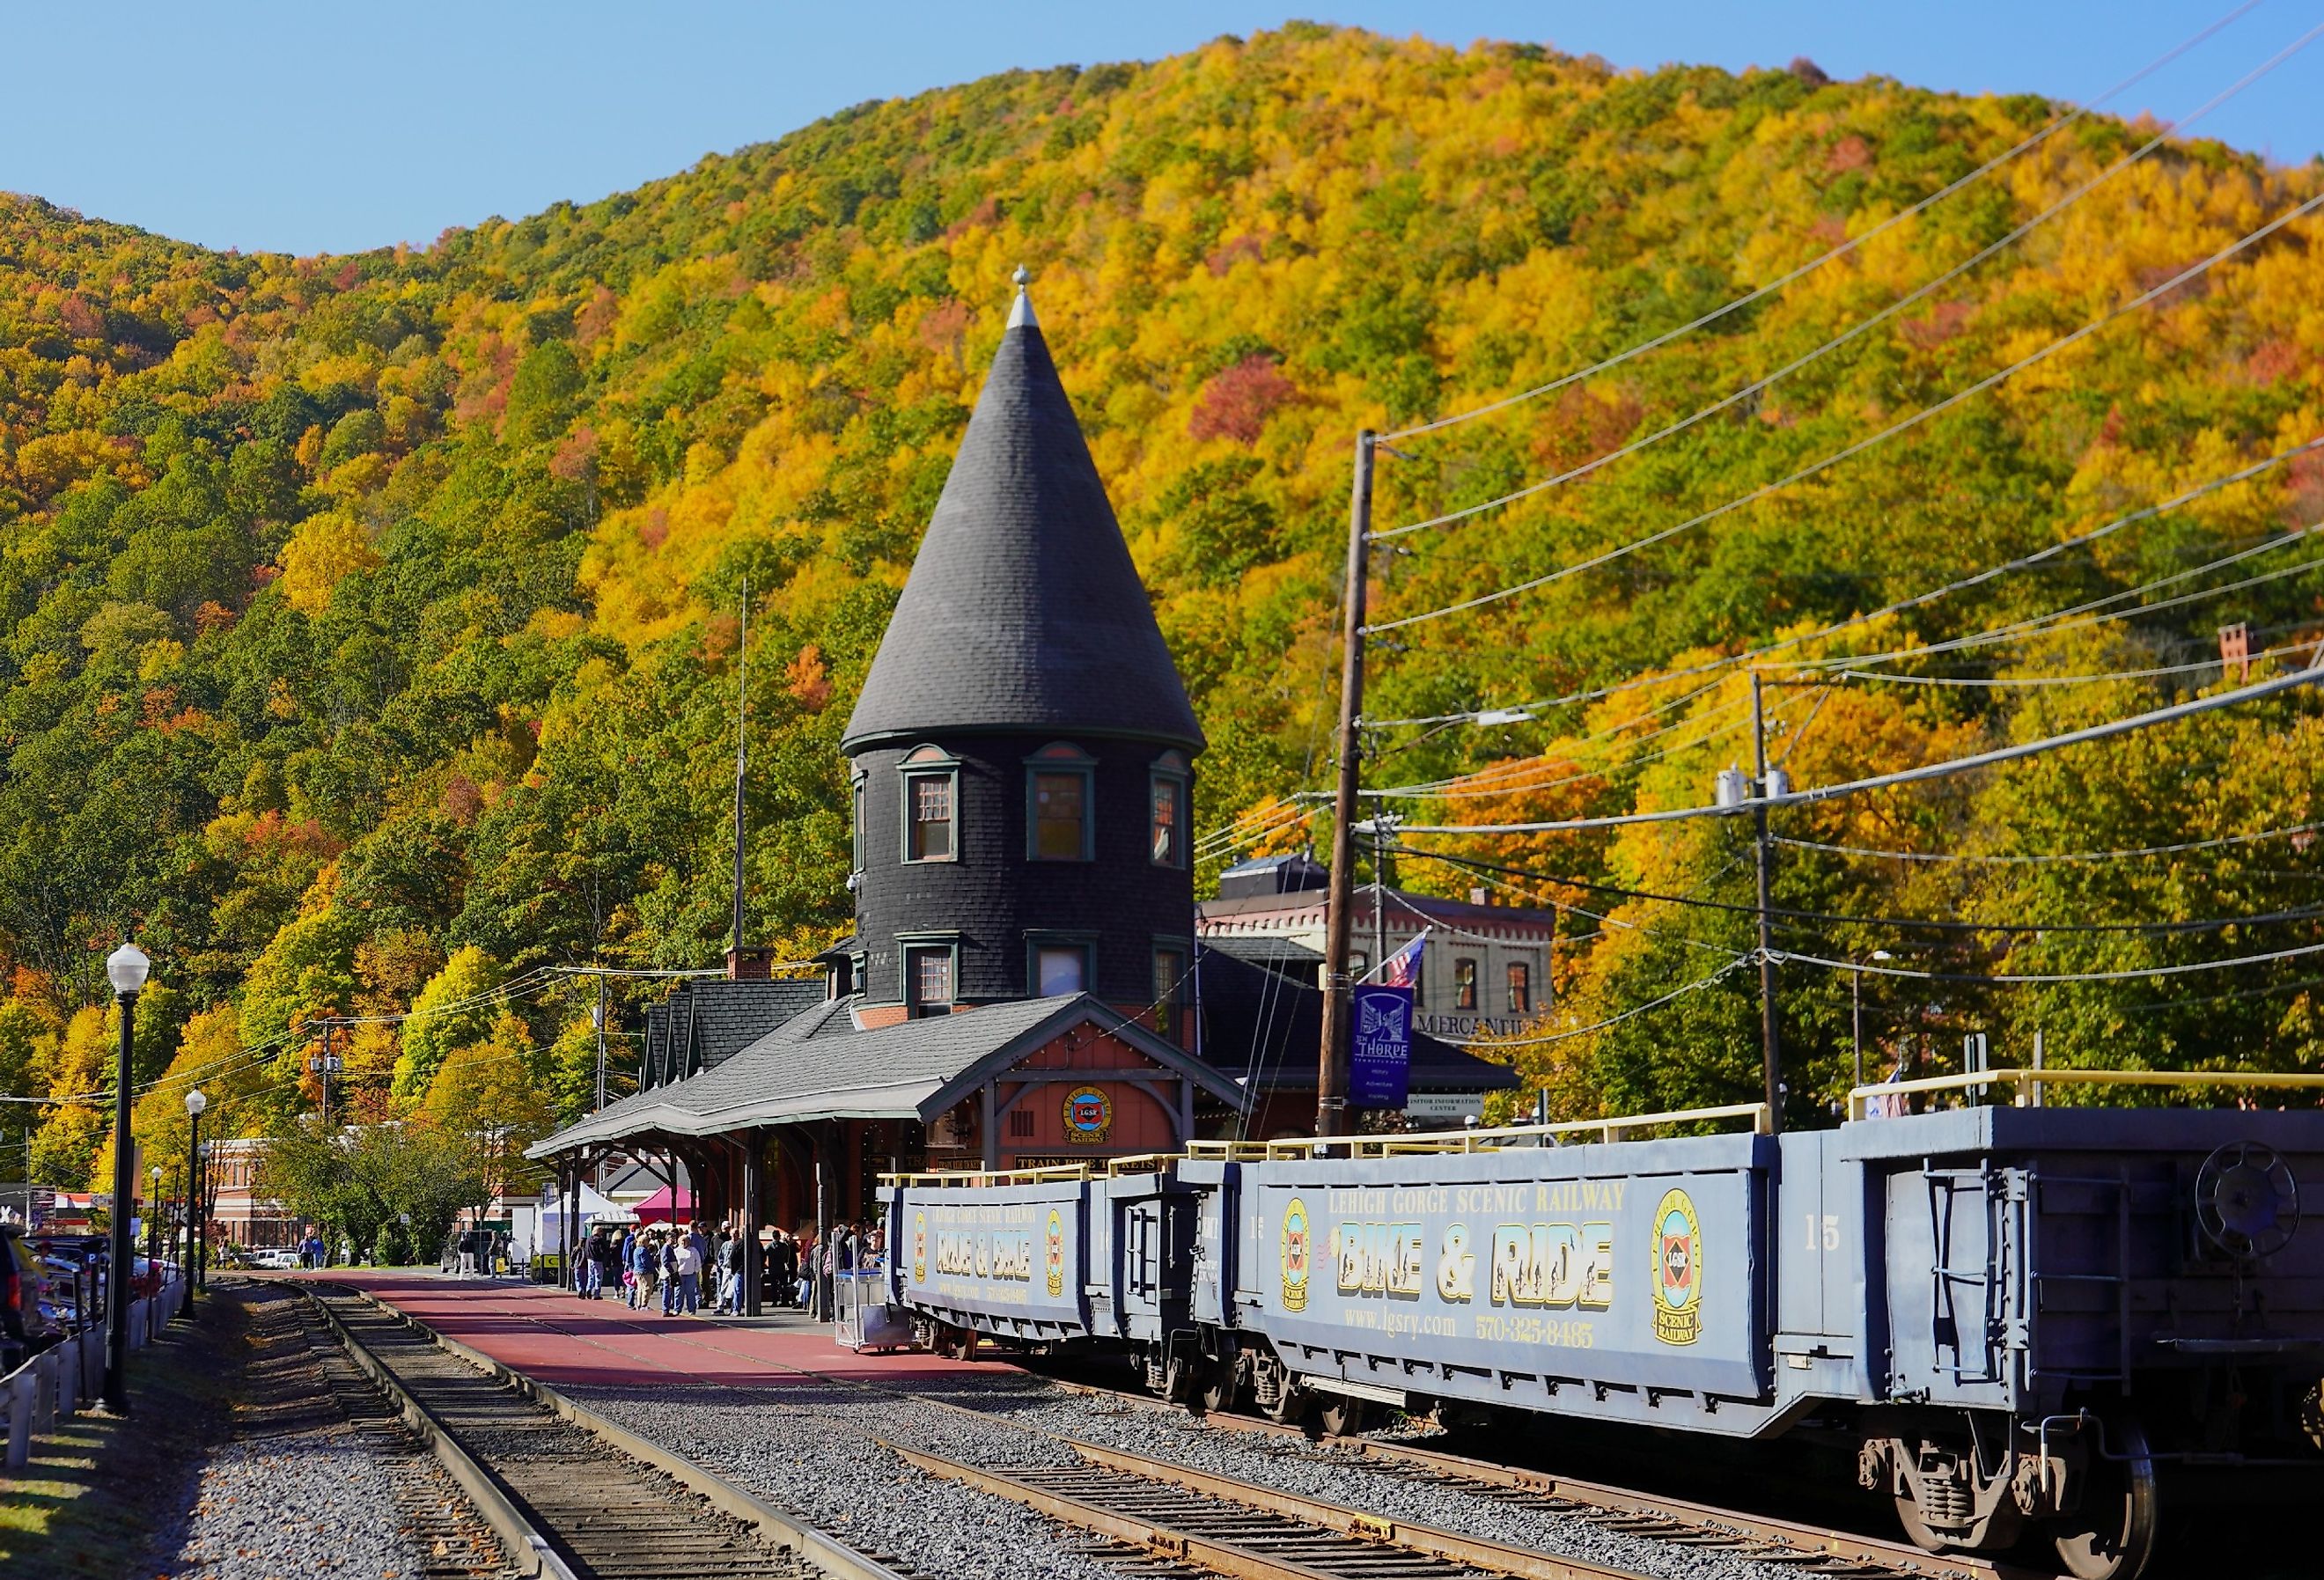 Jim Thorpe, Pennsylvania, Lehigh Gorge Scenic Railway in autumn. Image credit PT Hamilton via Shutterstock